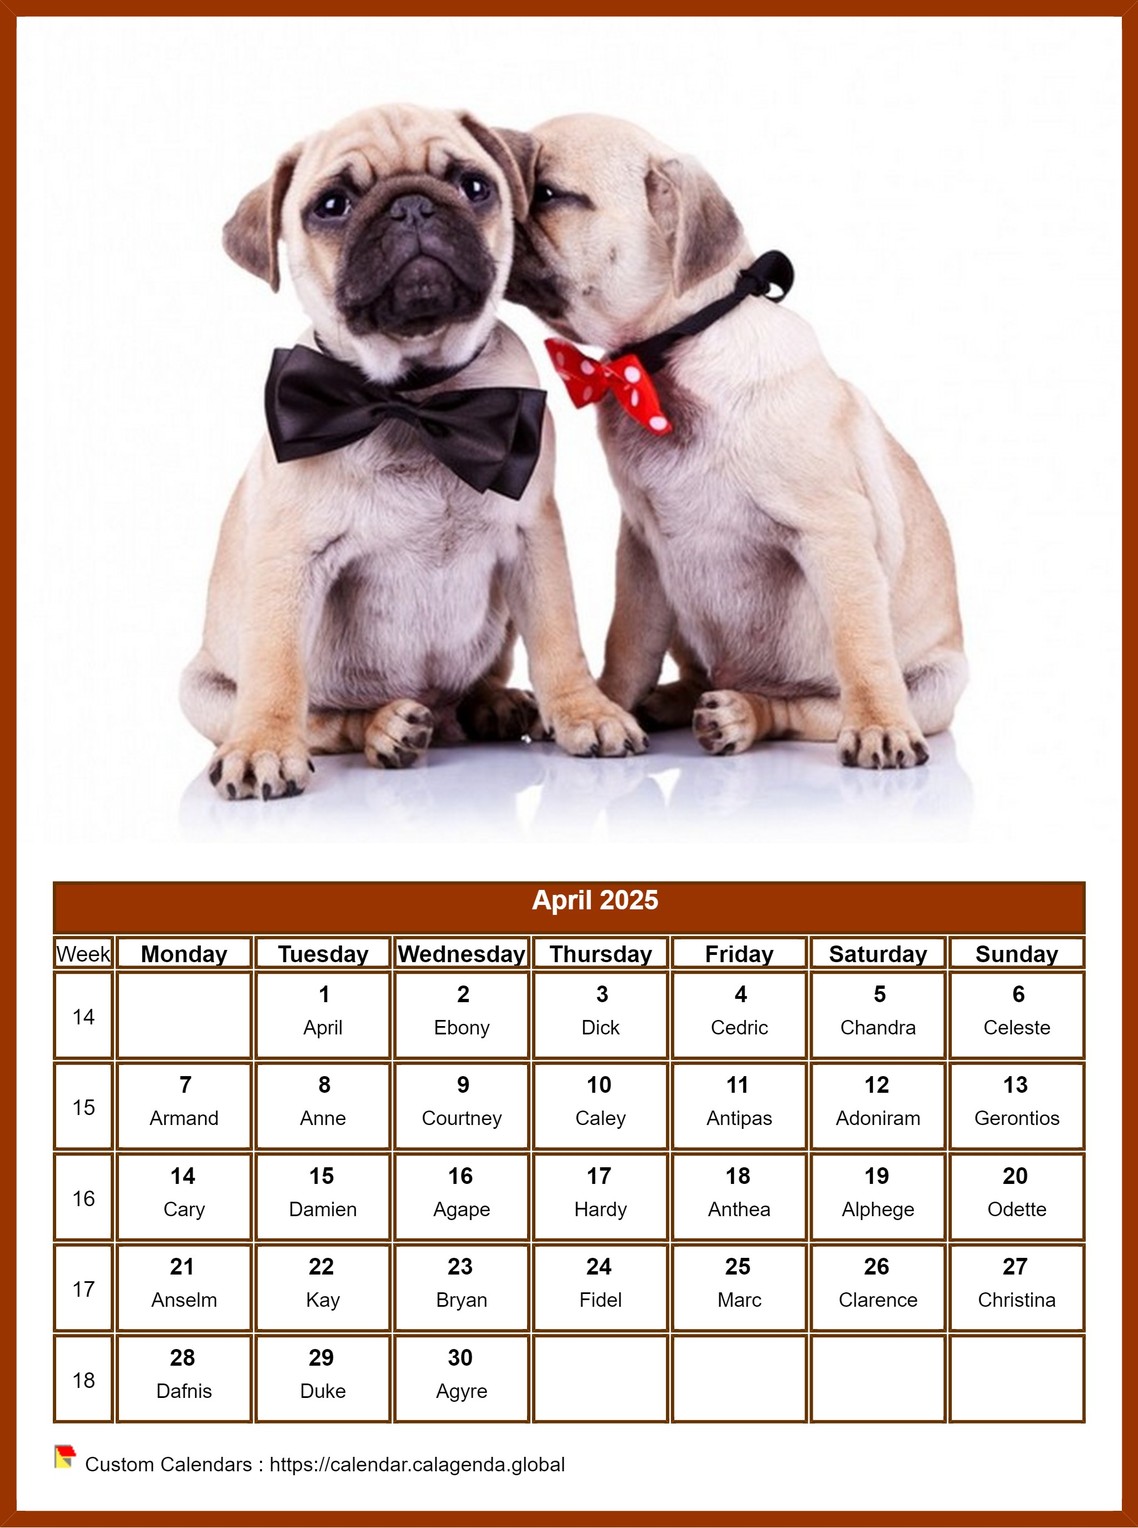 Calendar April 2025 dogs